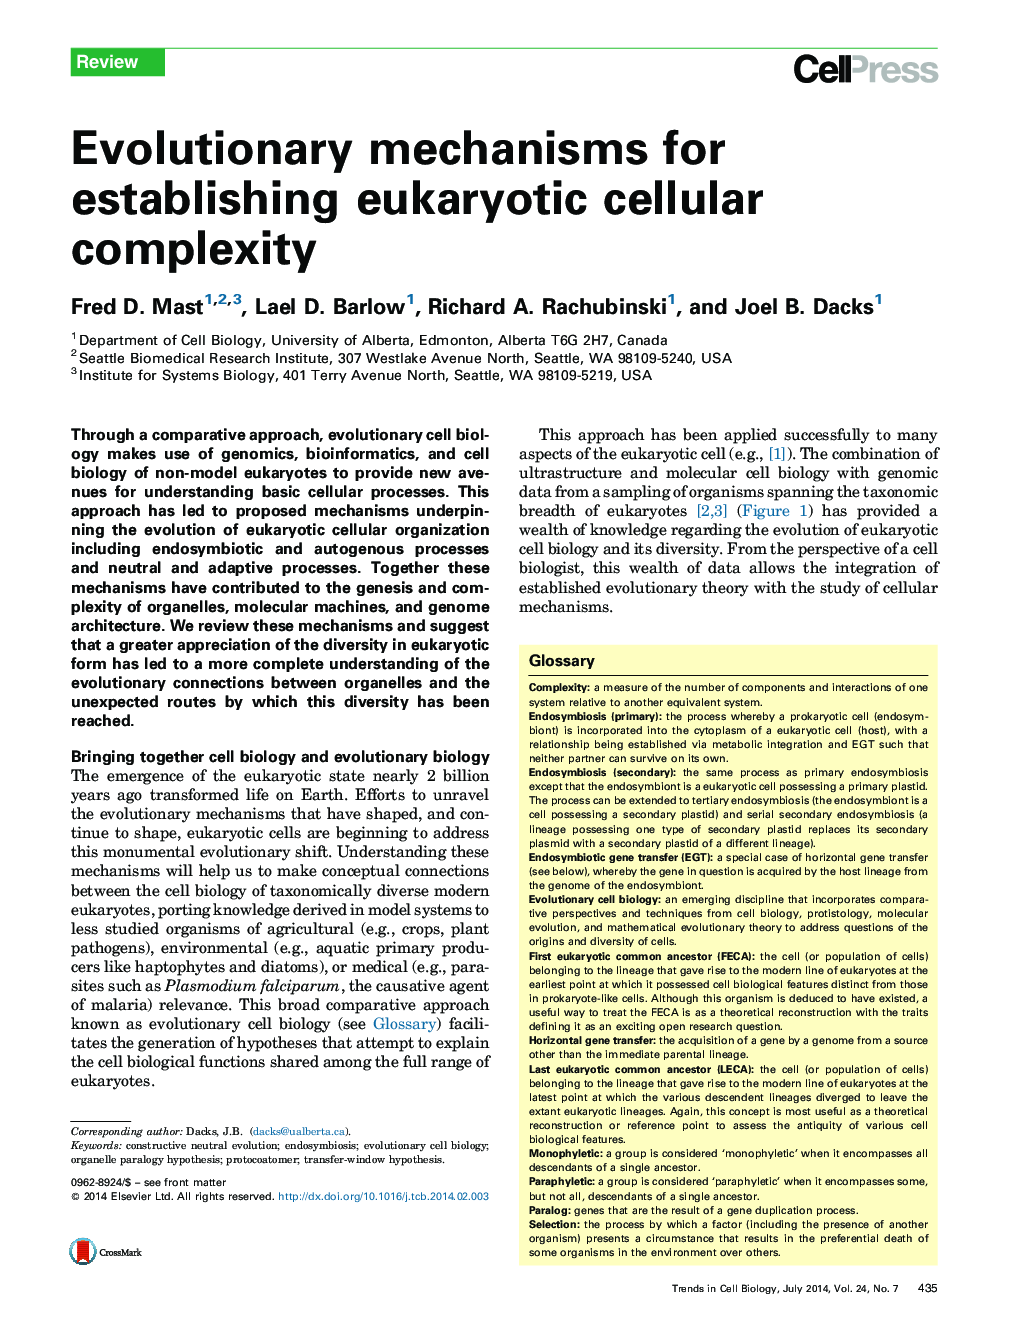 Evolutionary mechanisms for establishing eukaryotic cellular complexity